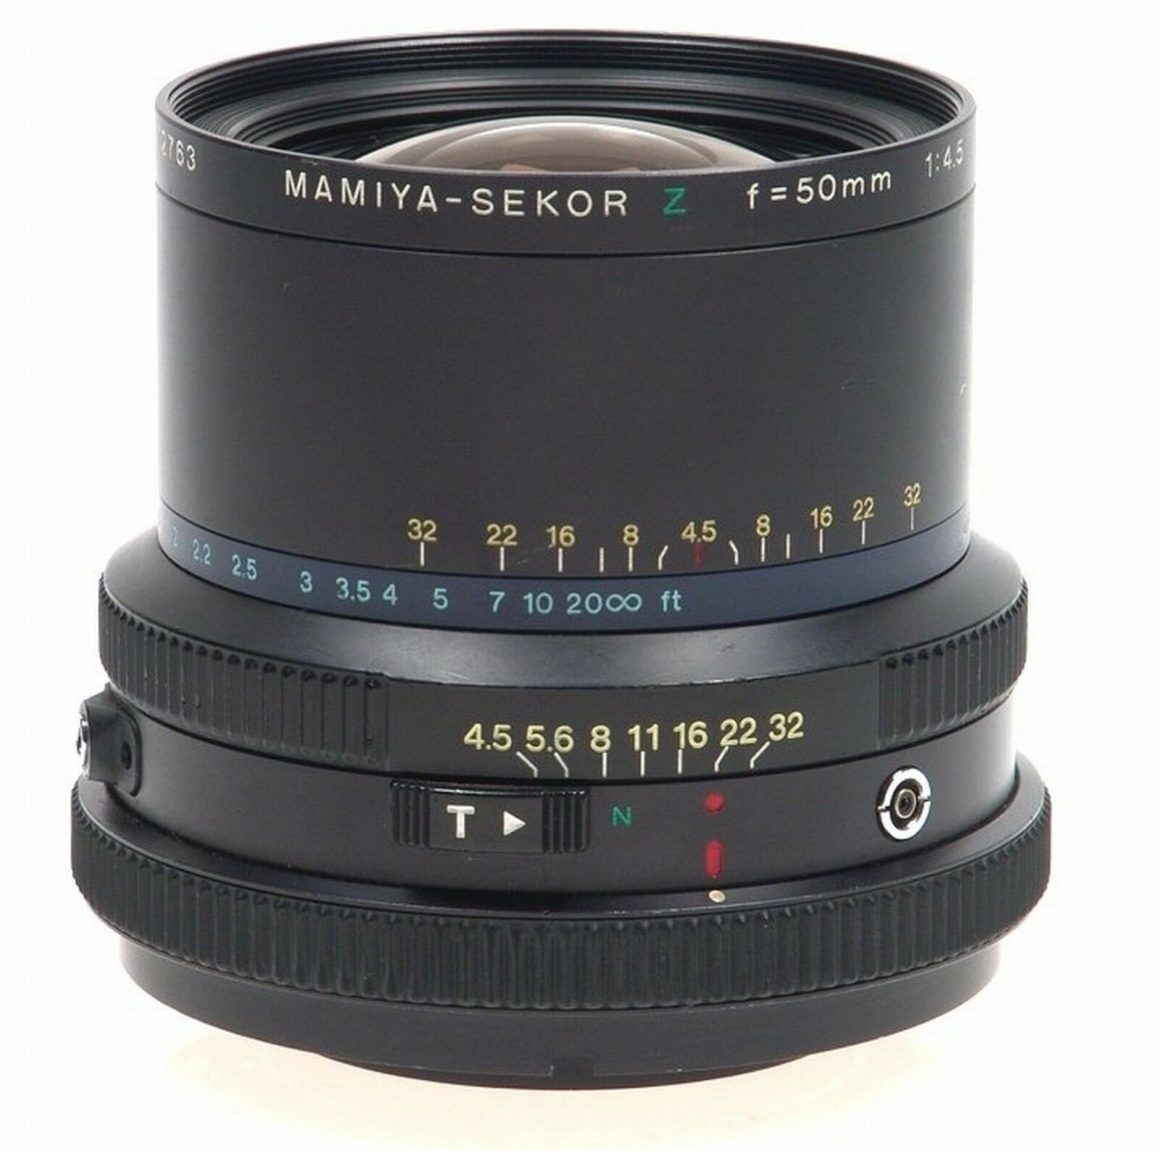 Mamiya-Sekor Z 50mm F/4.5 W | LENS-DB.COM